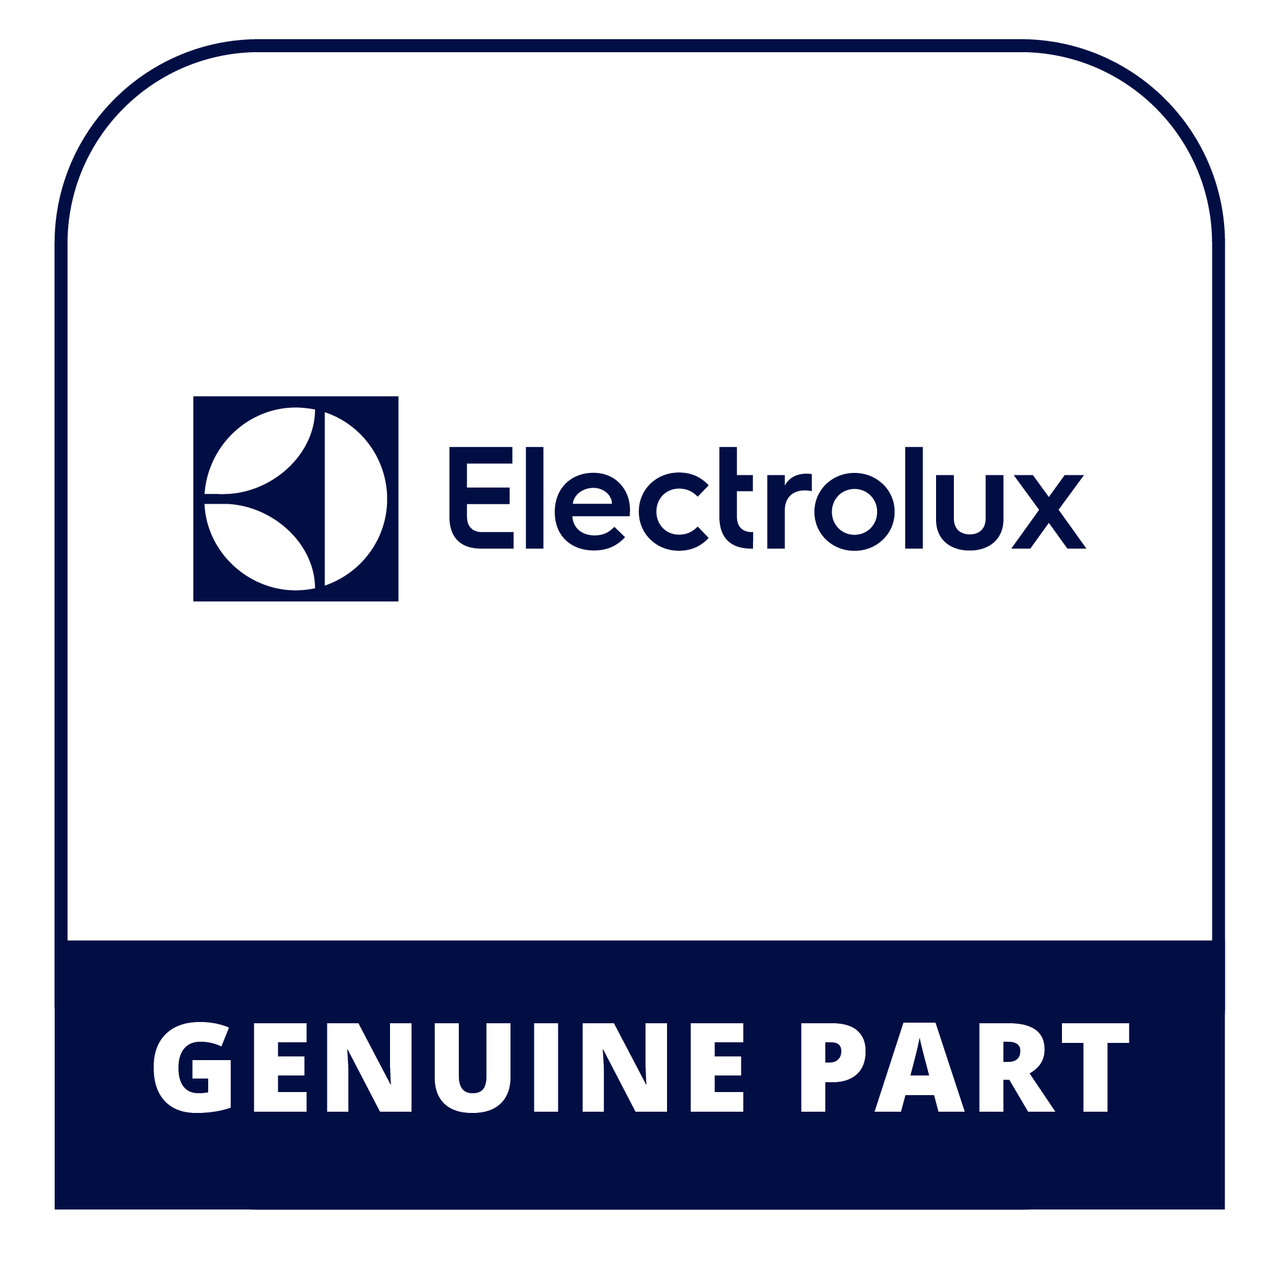 Frigidaire - Electrolux 5304518141 Shield - Genuine Electrolux Part